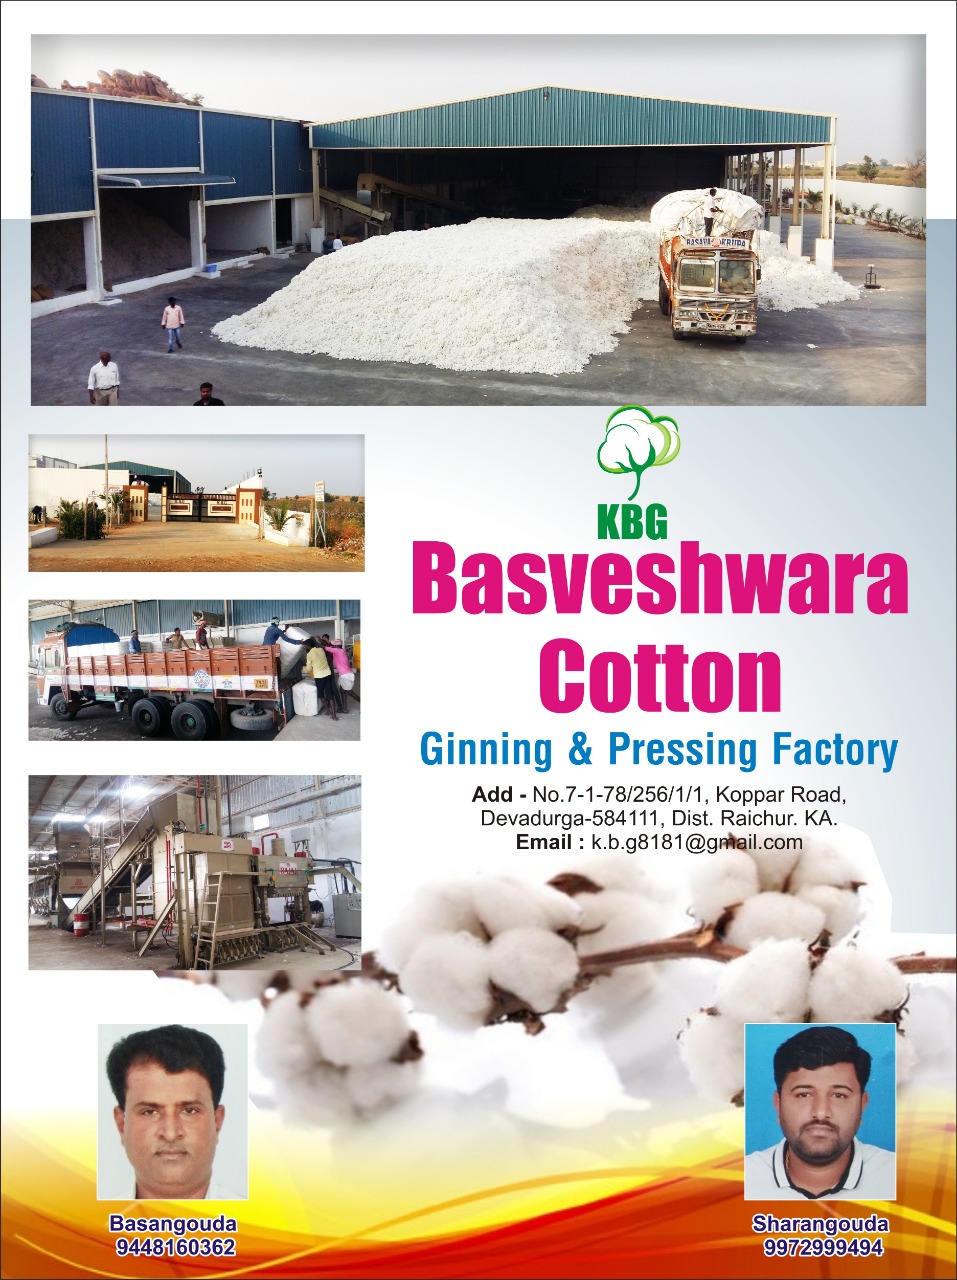 Basveshwara Cotton - Cotton Ginning and Pressing Factory